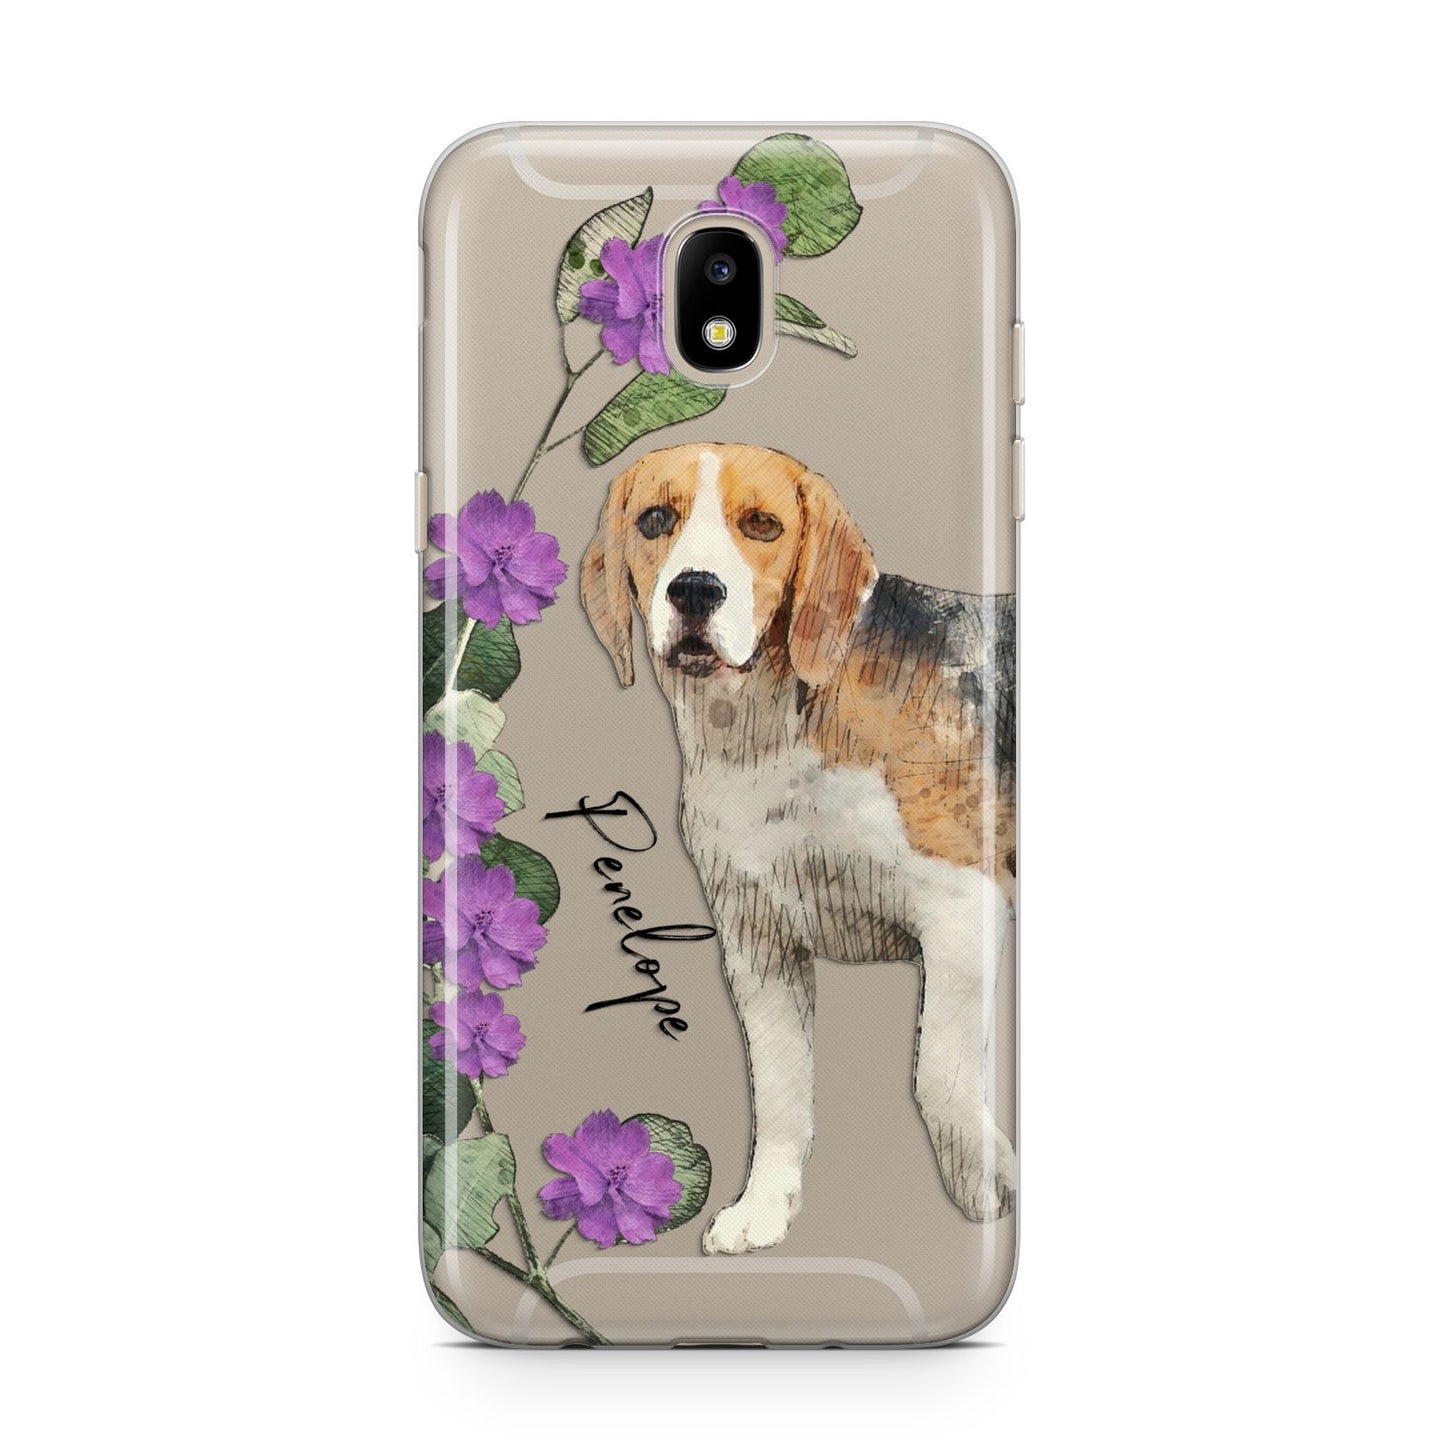 Personalised Dog Samsung J5 2017 Case